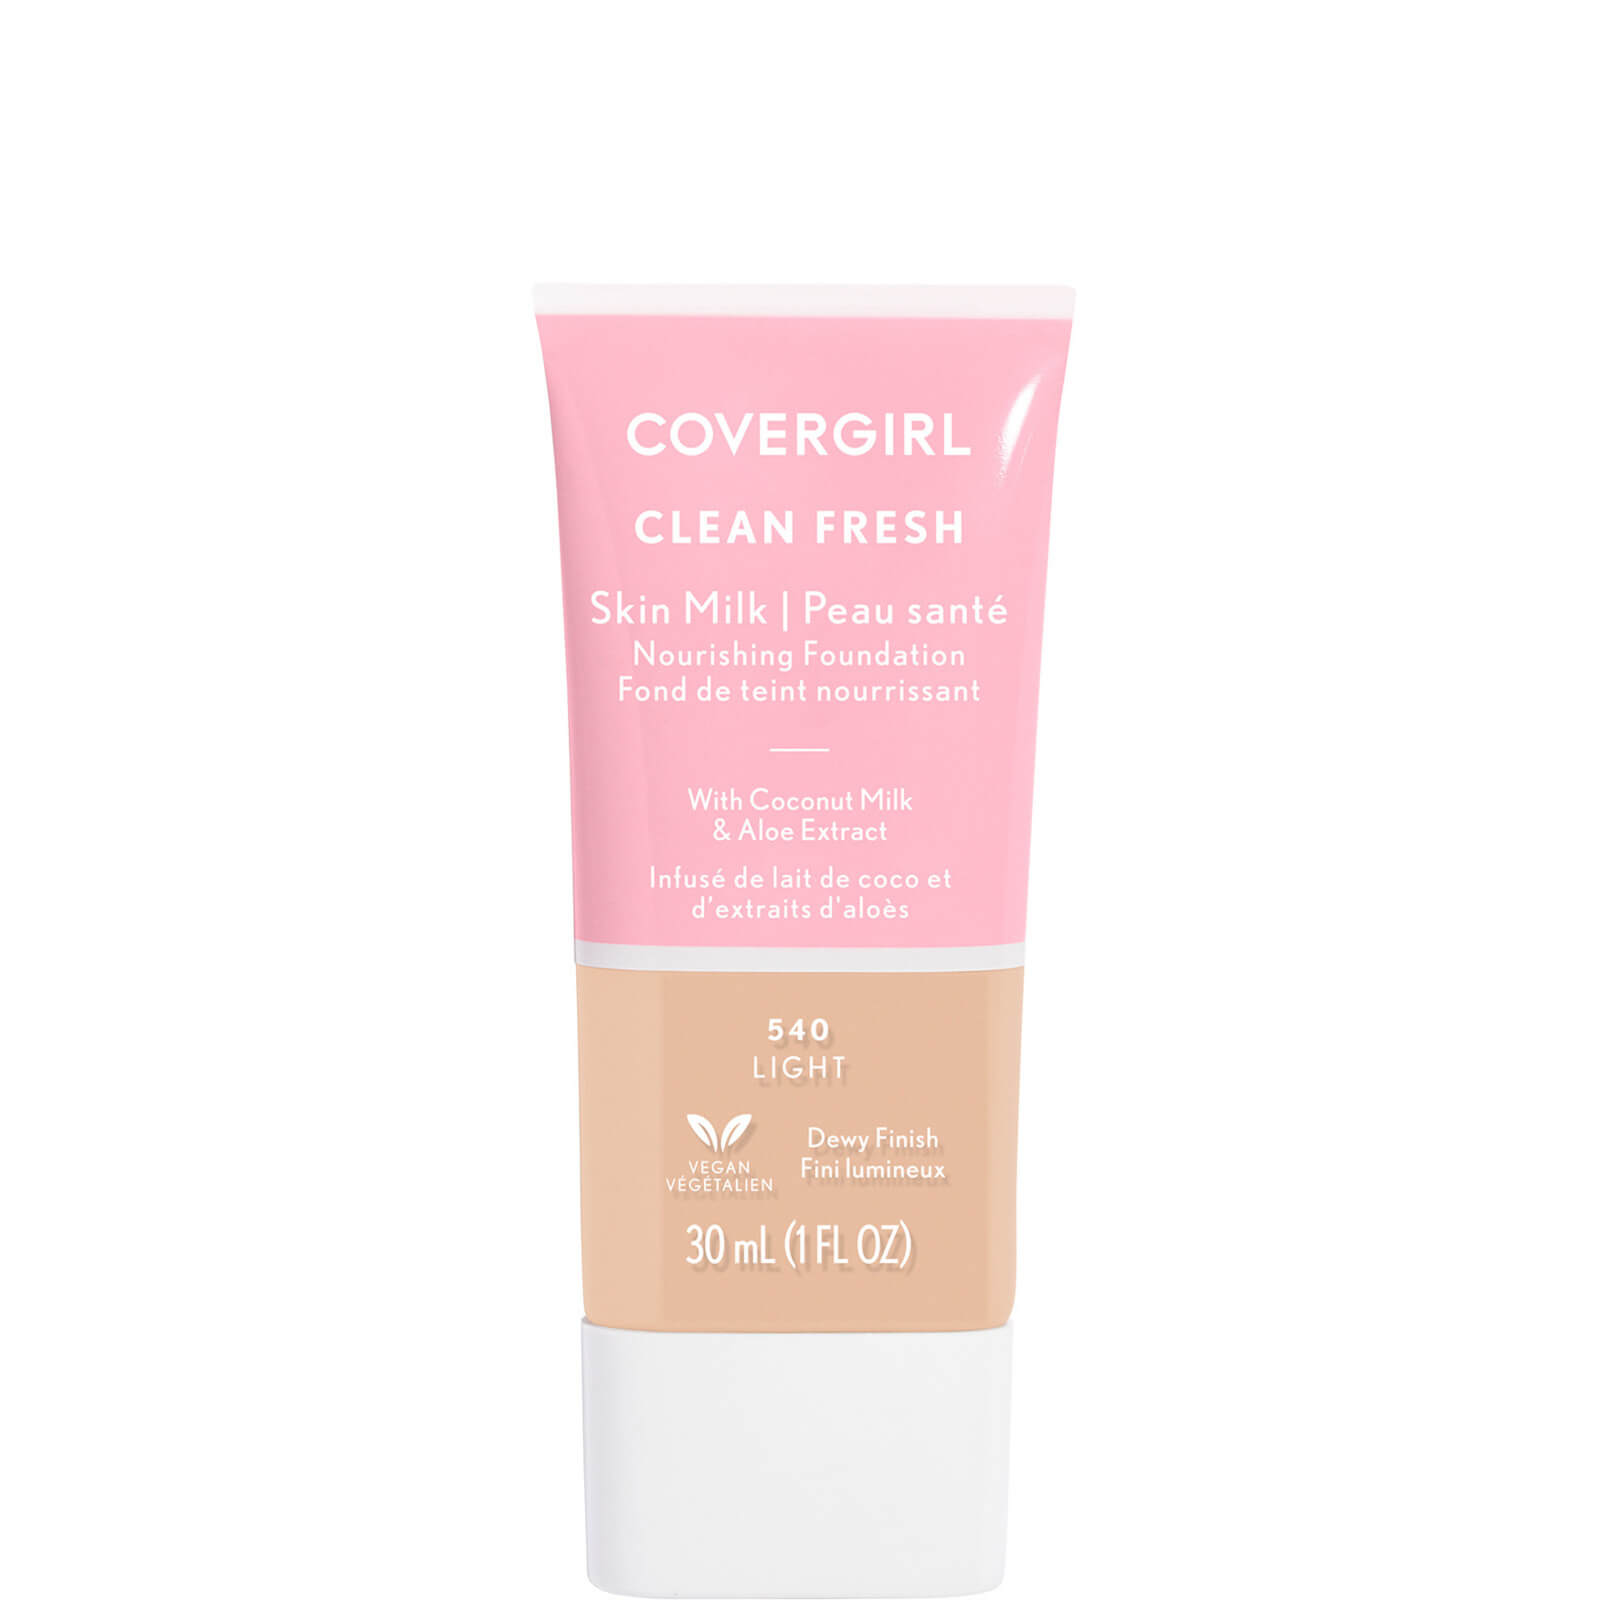 Covergirl Clean Fresh Skin Milk Foundation 1oz (Various Shades) - Light